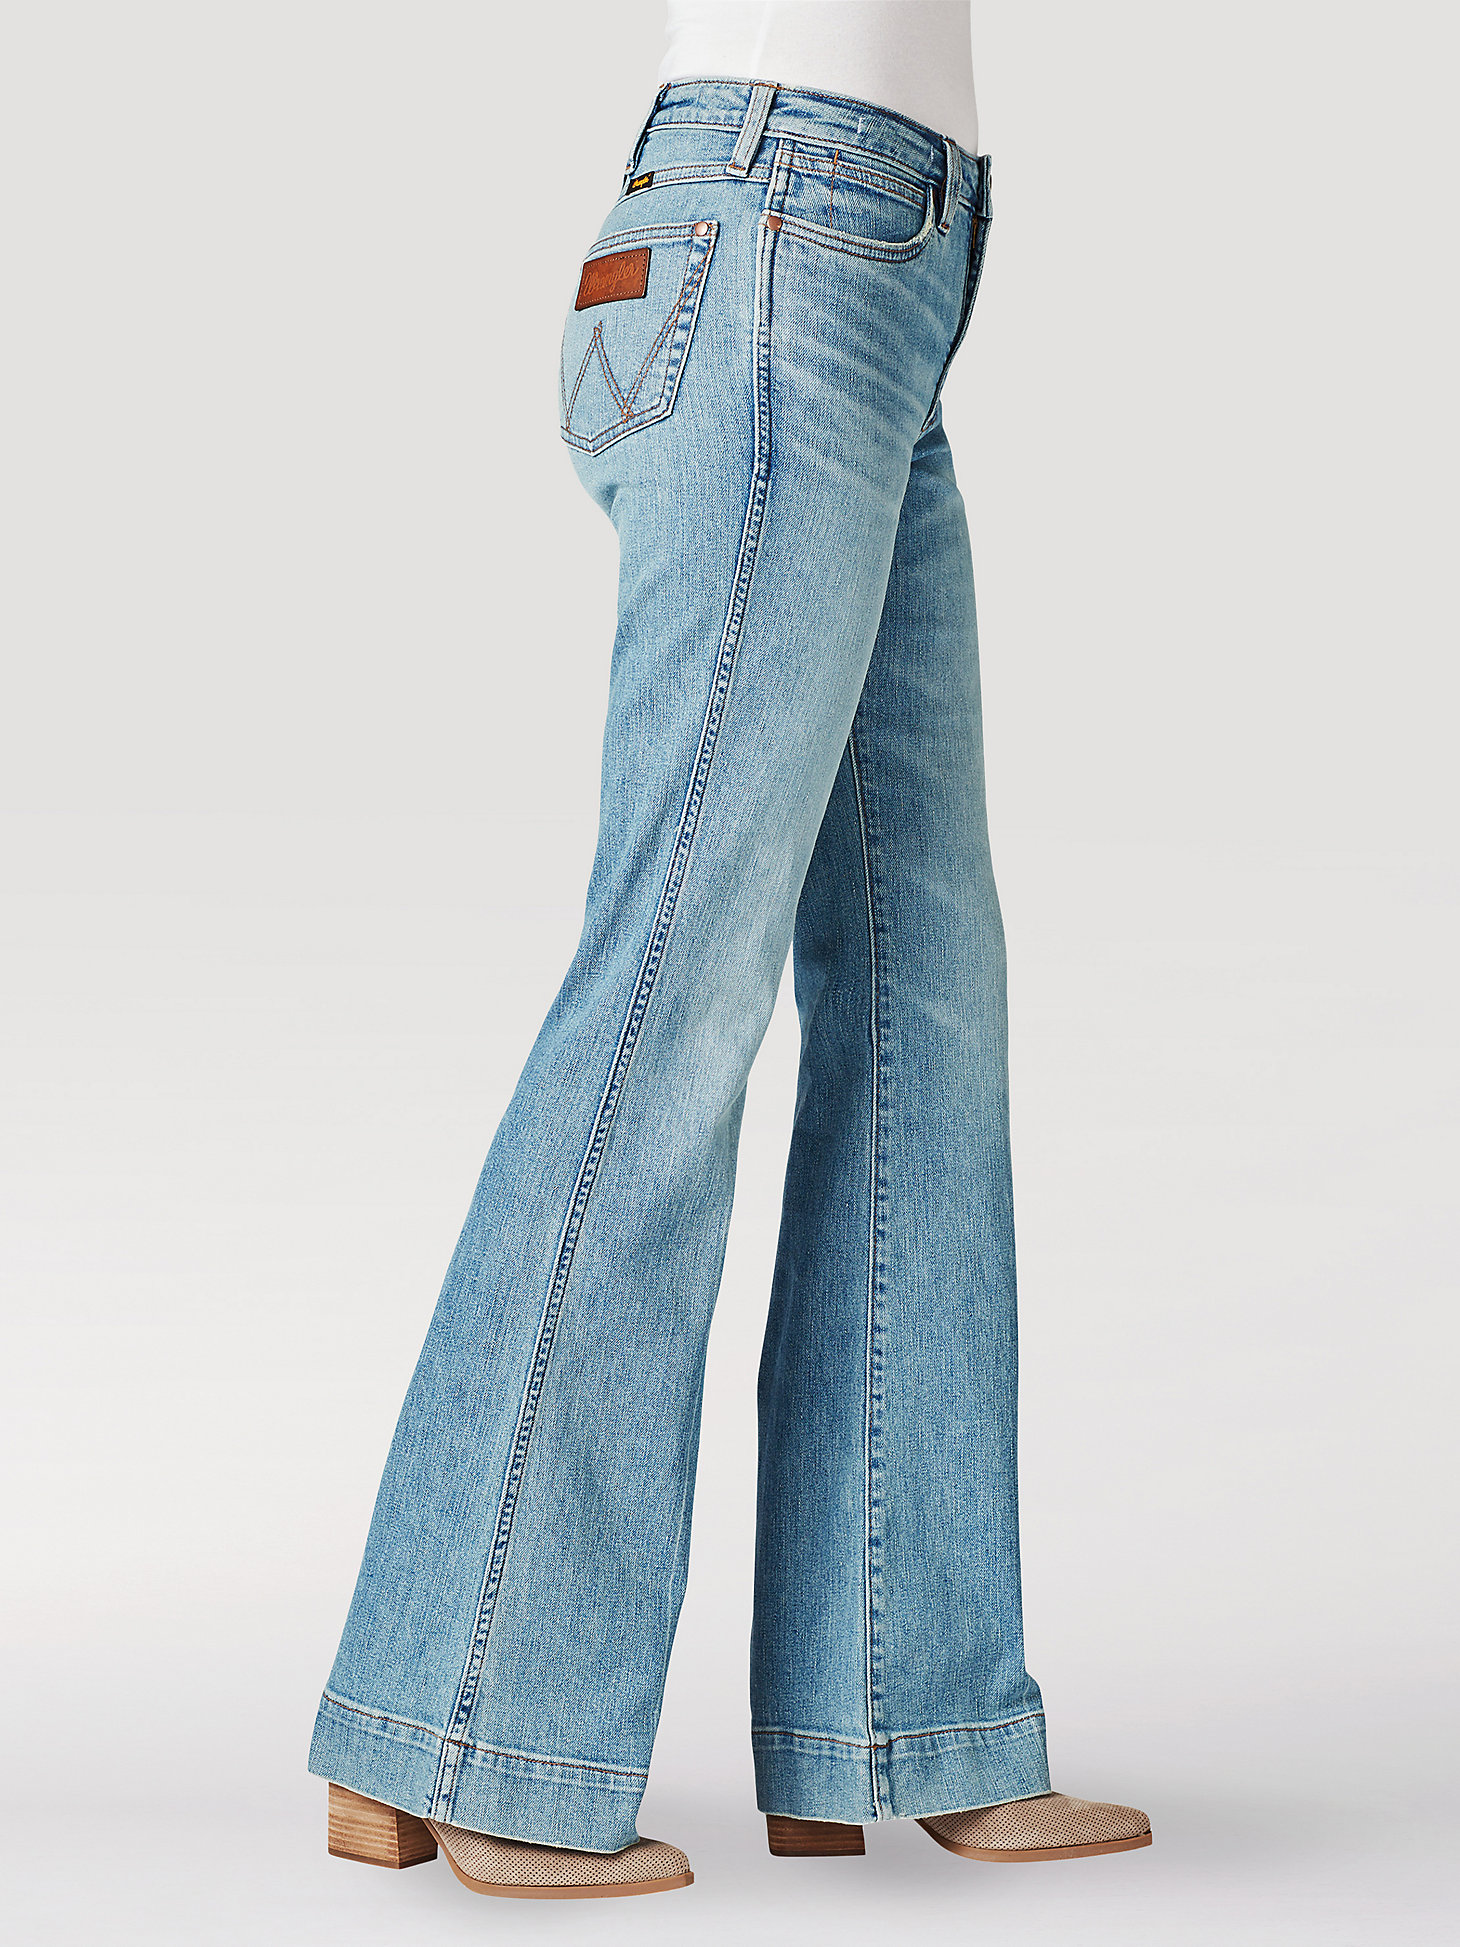 The Wrangler Retro® Premium Jean: Women's High Rise Trouser in Emma alternative view 4